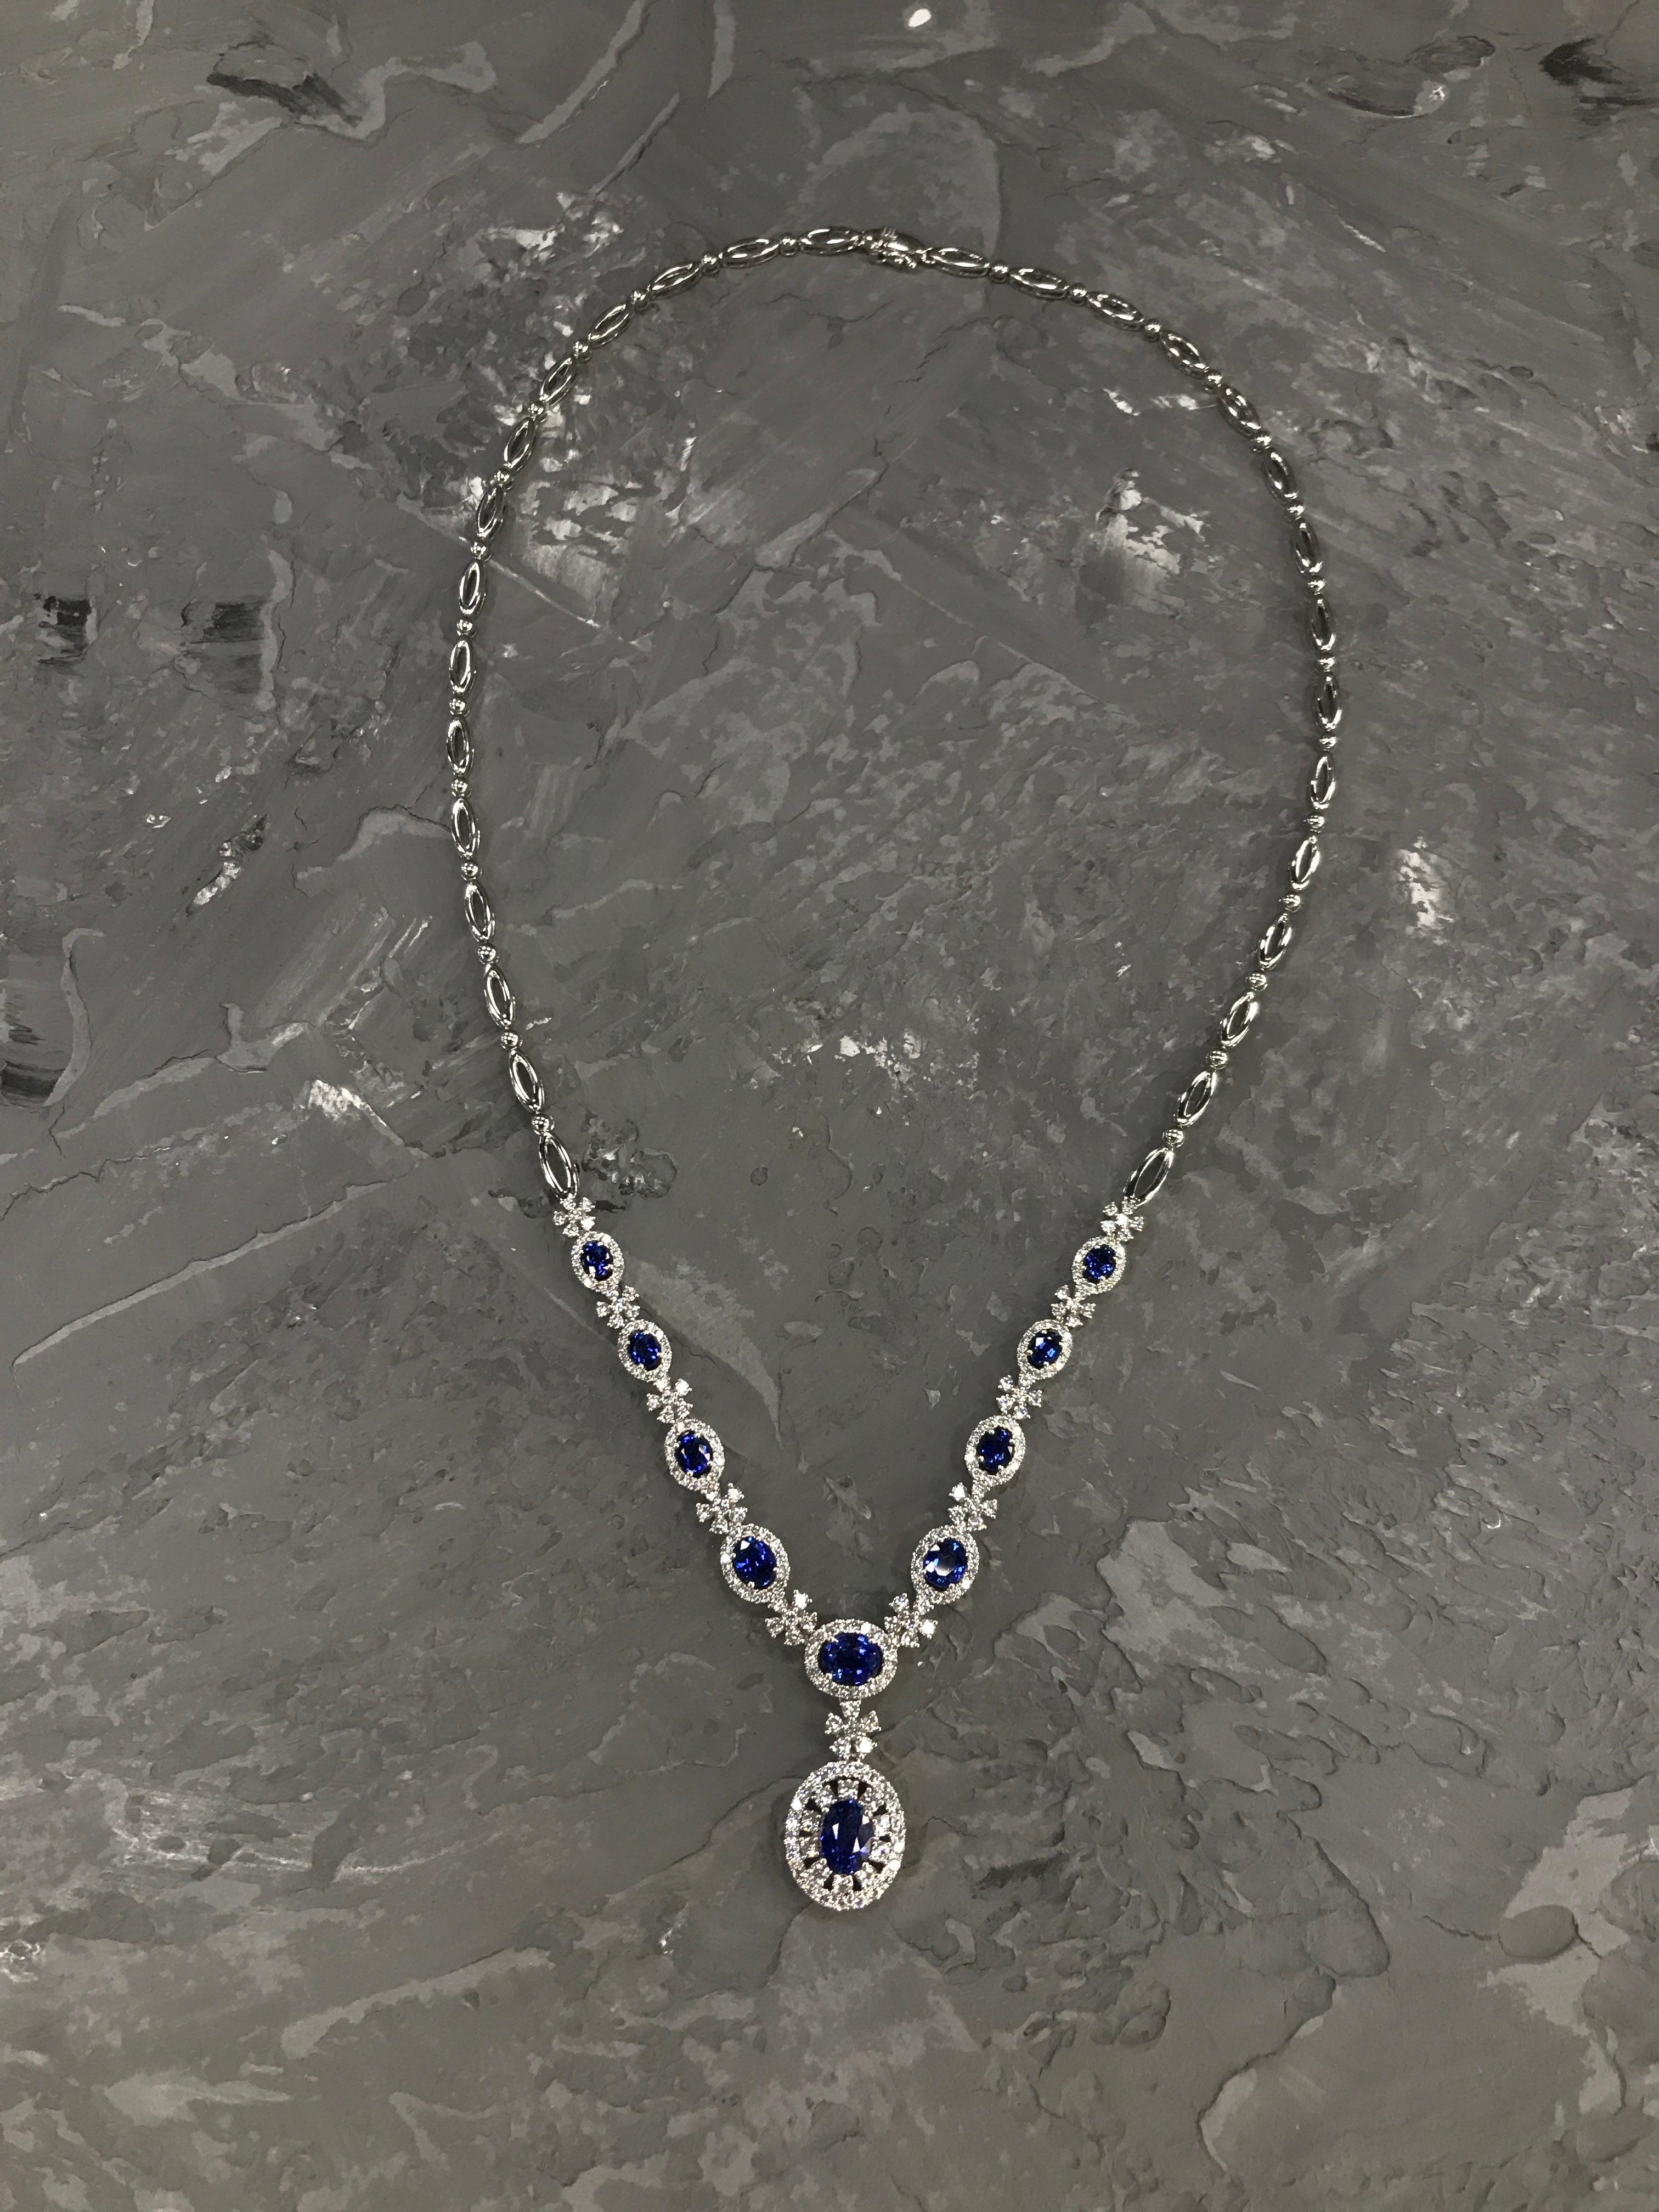 royal sapphire necklace